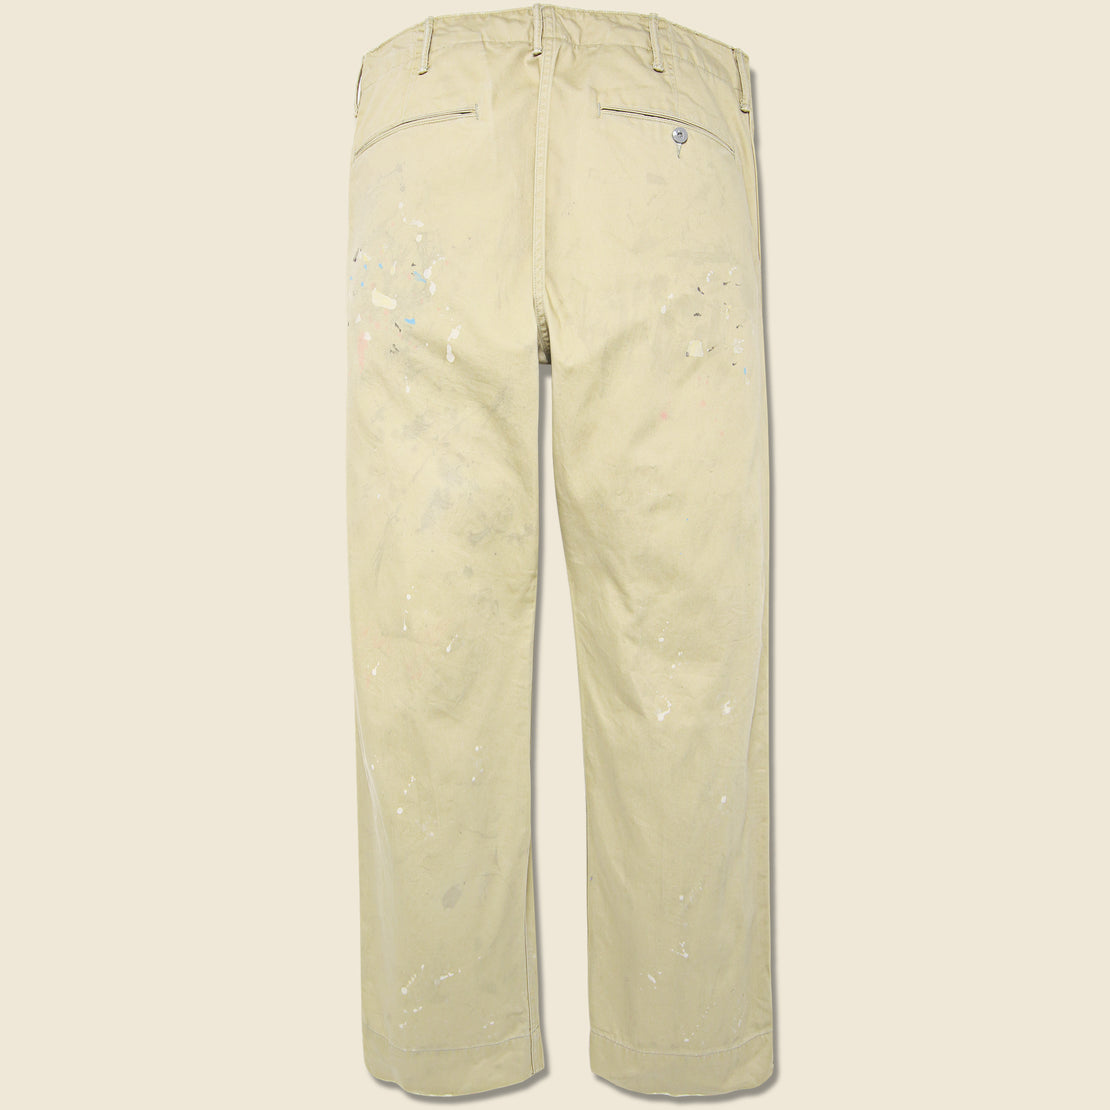 Distressed Cotton Field Chino - Vintage Khaki - RRL - STAG Provisions - Pants - Twill